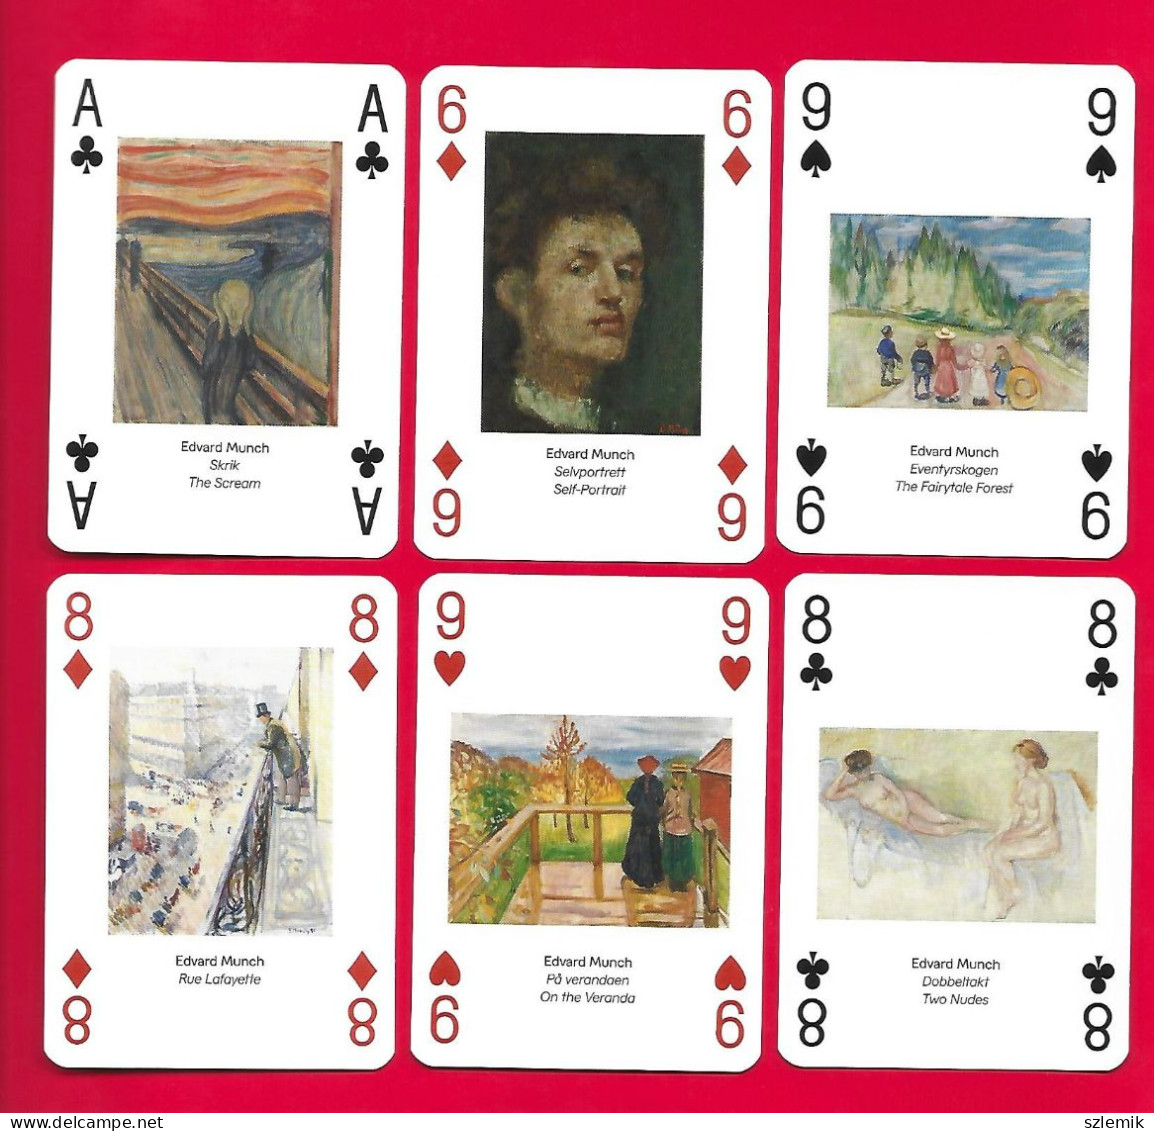 Playing Cards 52 + 3 Jokers. Nacjonalmuseet   OSLO  (MUNCH),  TREFL For Norwey - 2023. Size POKER - 54 Cartas